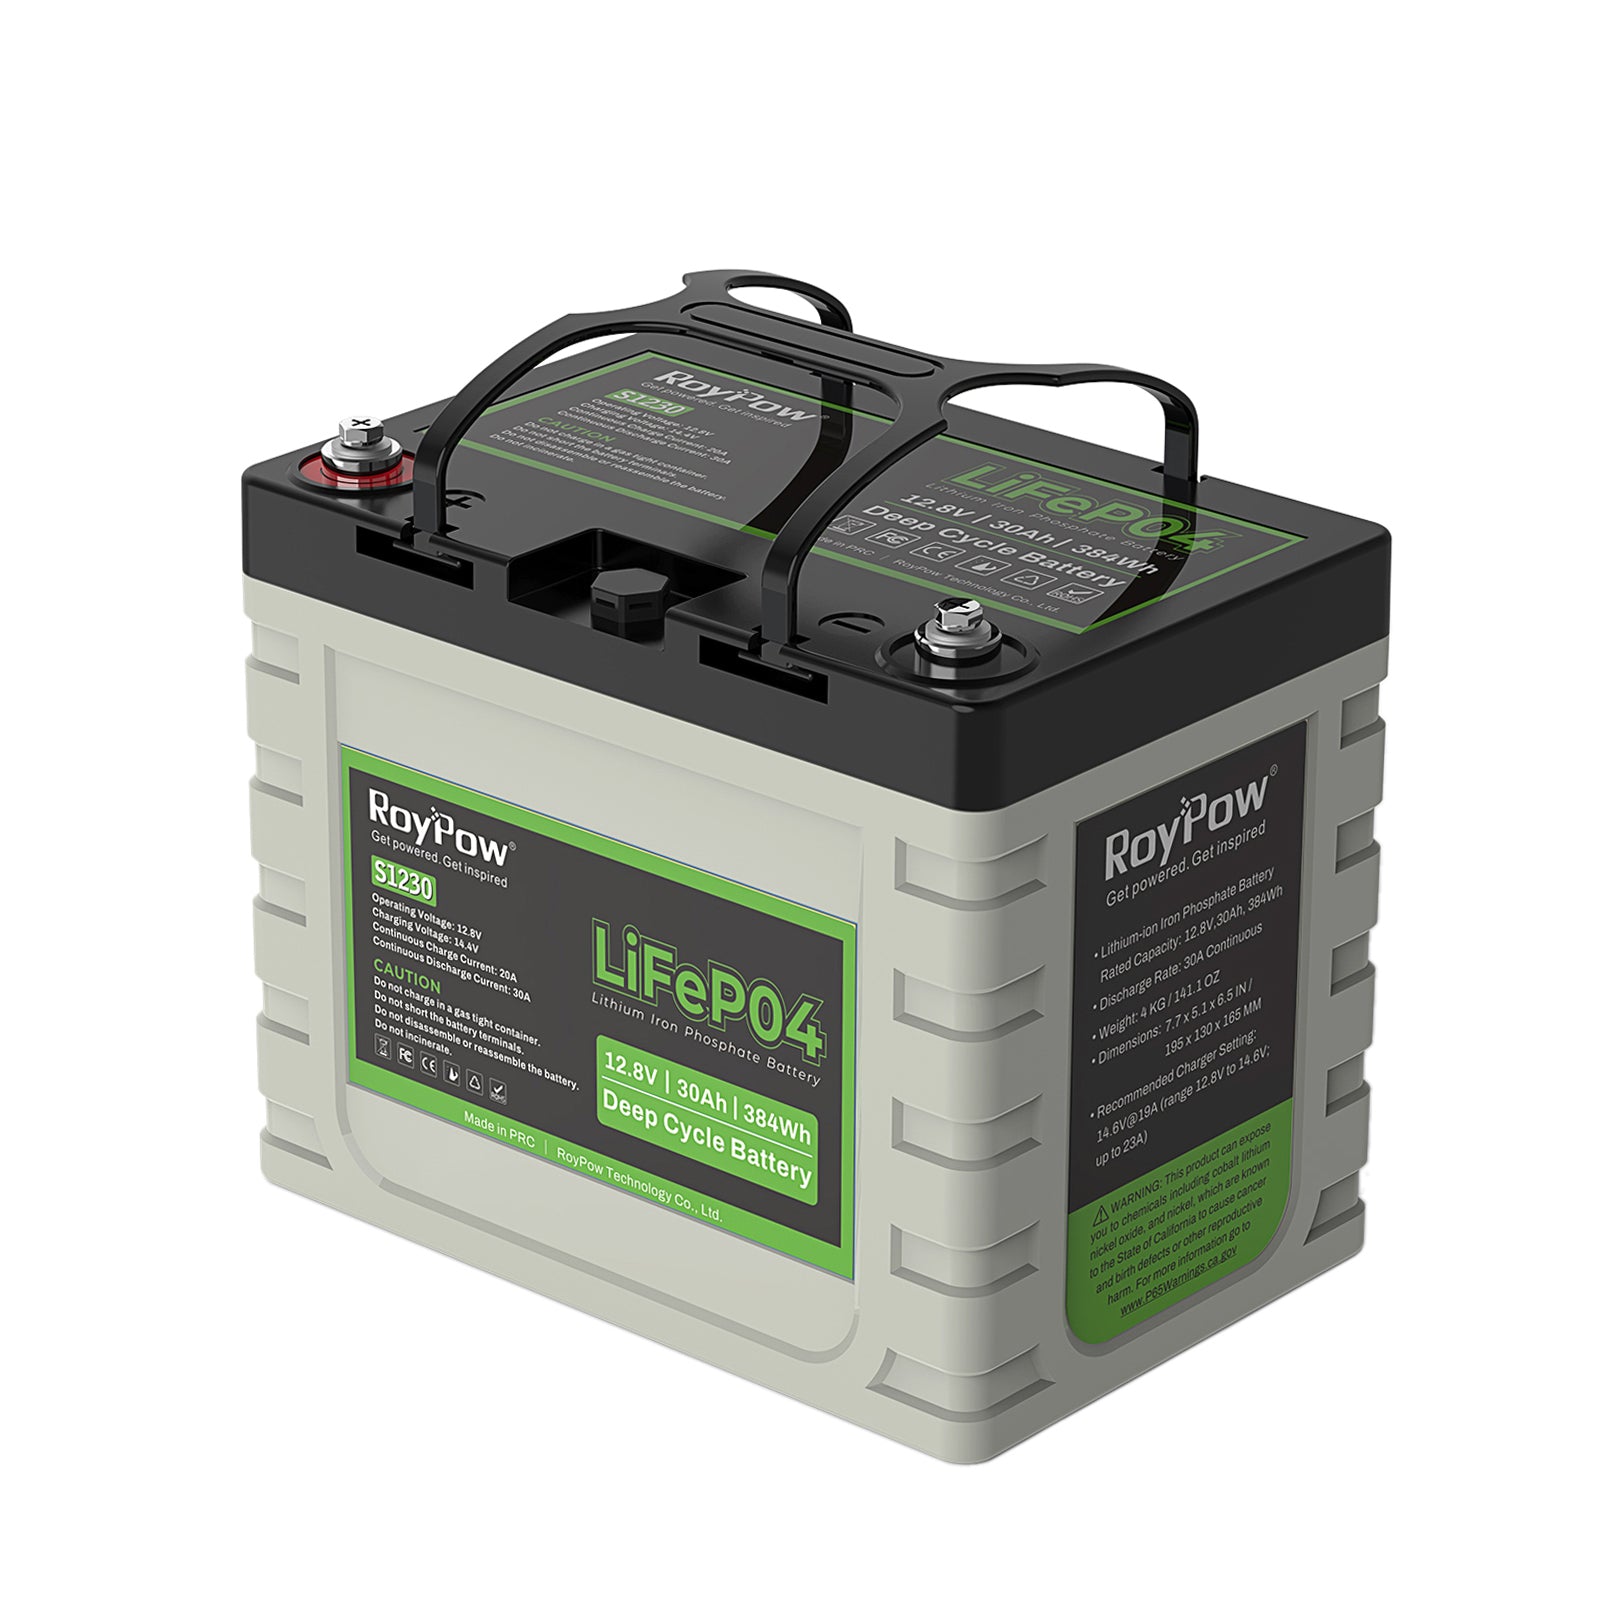  batterie lithium Batterie rechargeable LiFePO4 à cycle